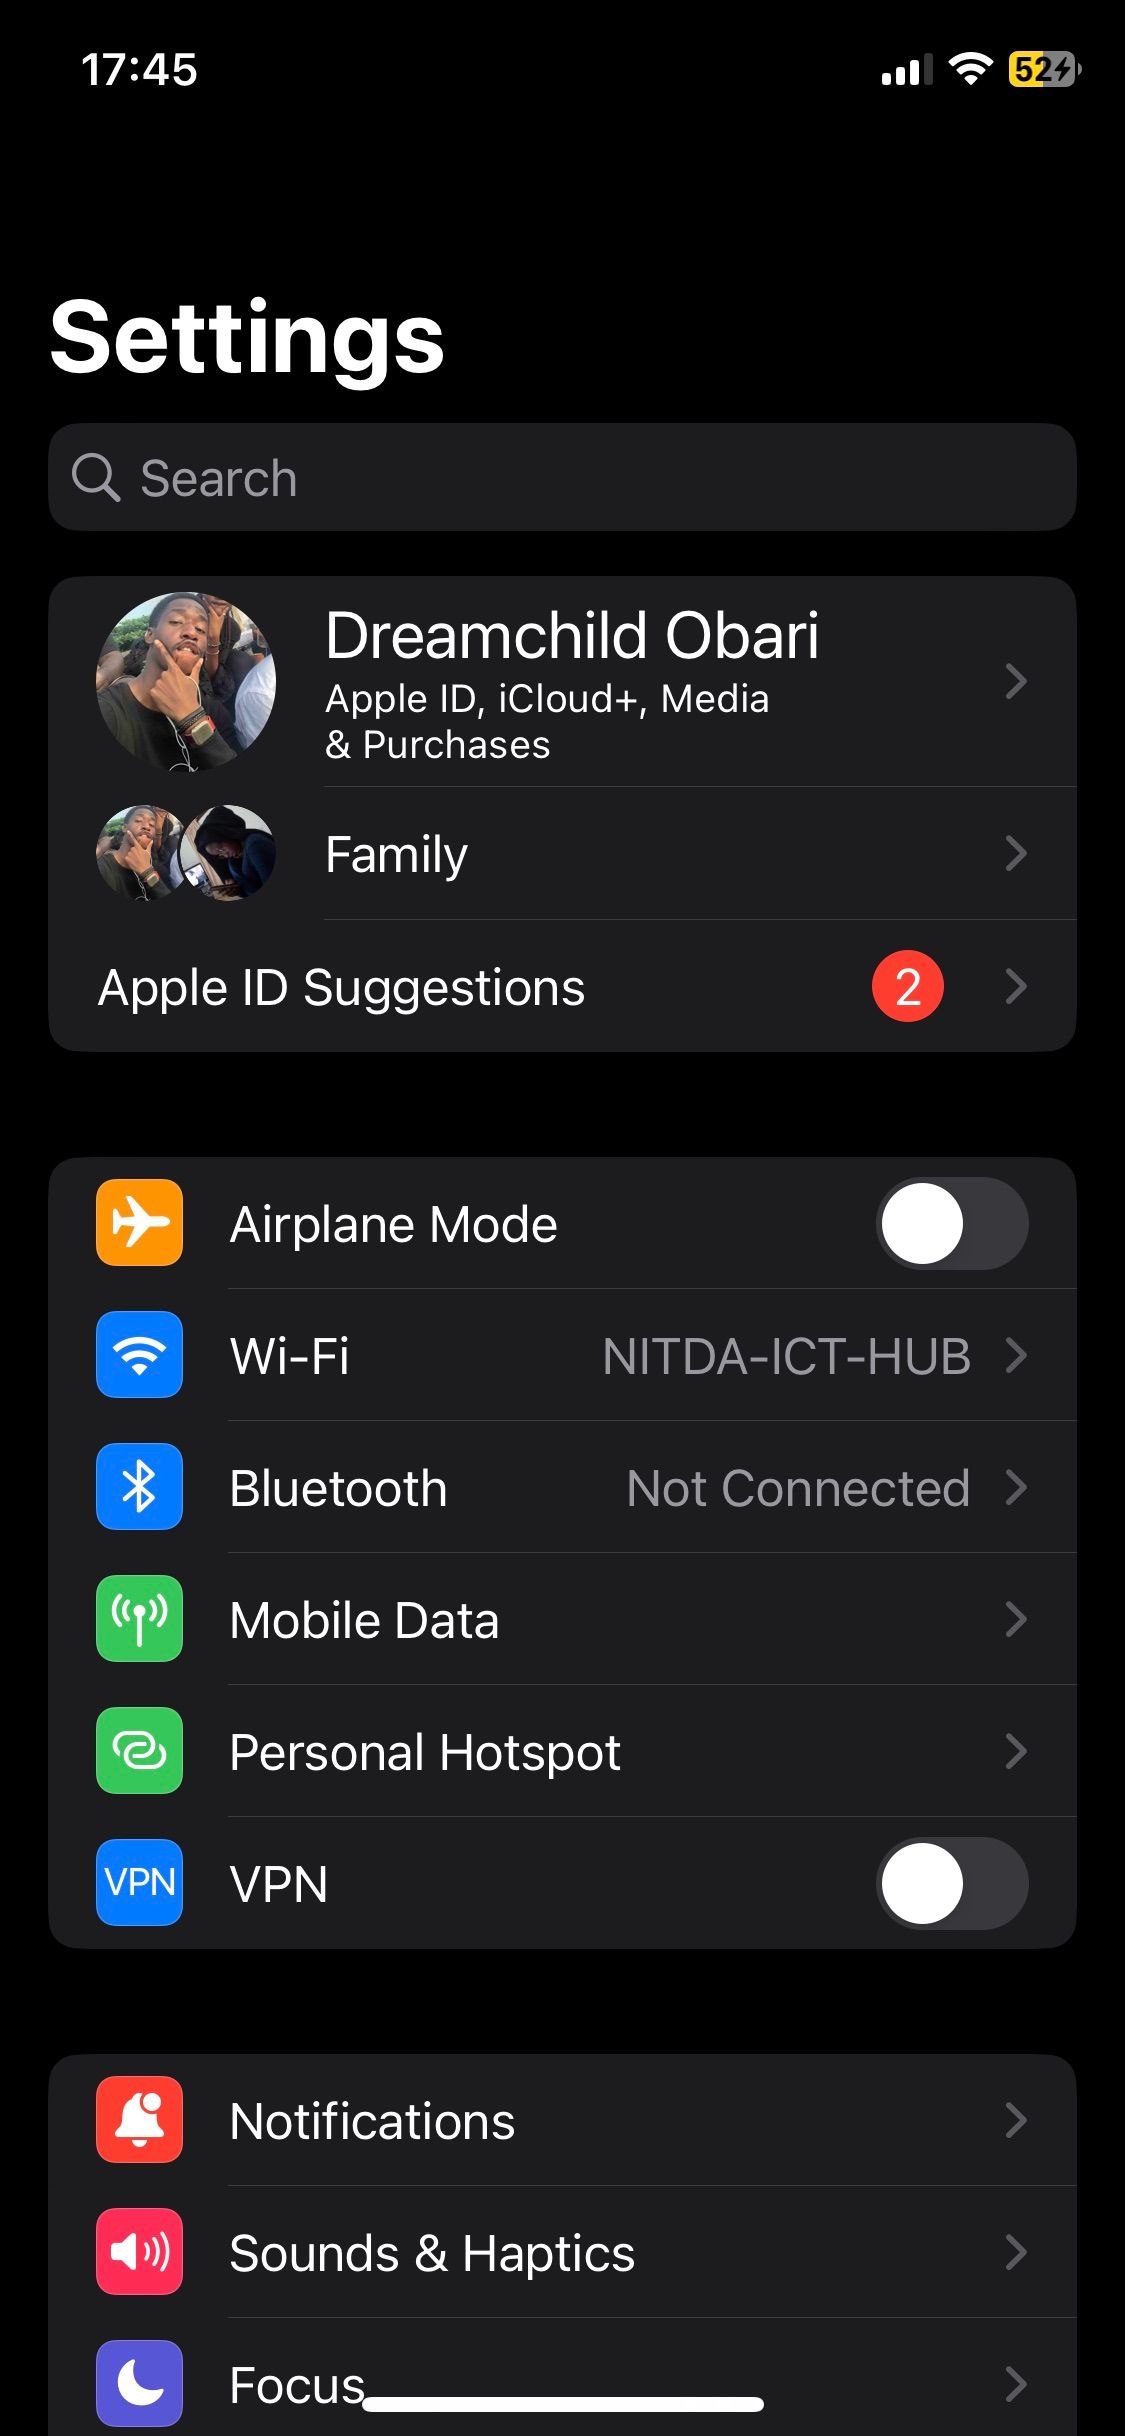 Settings home screen on iOS